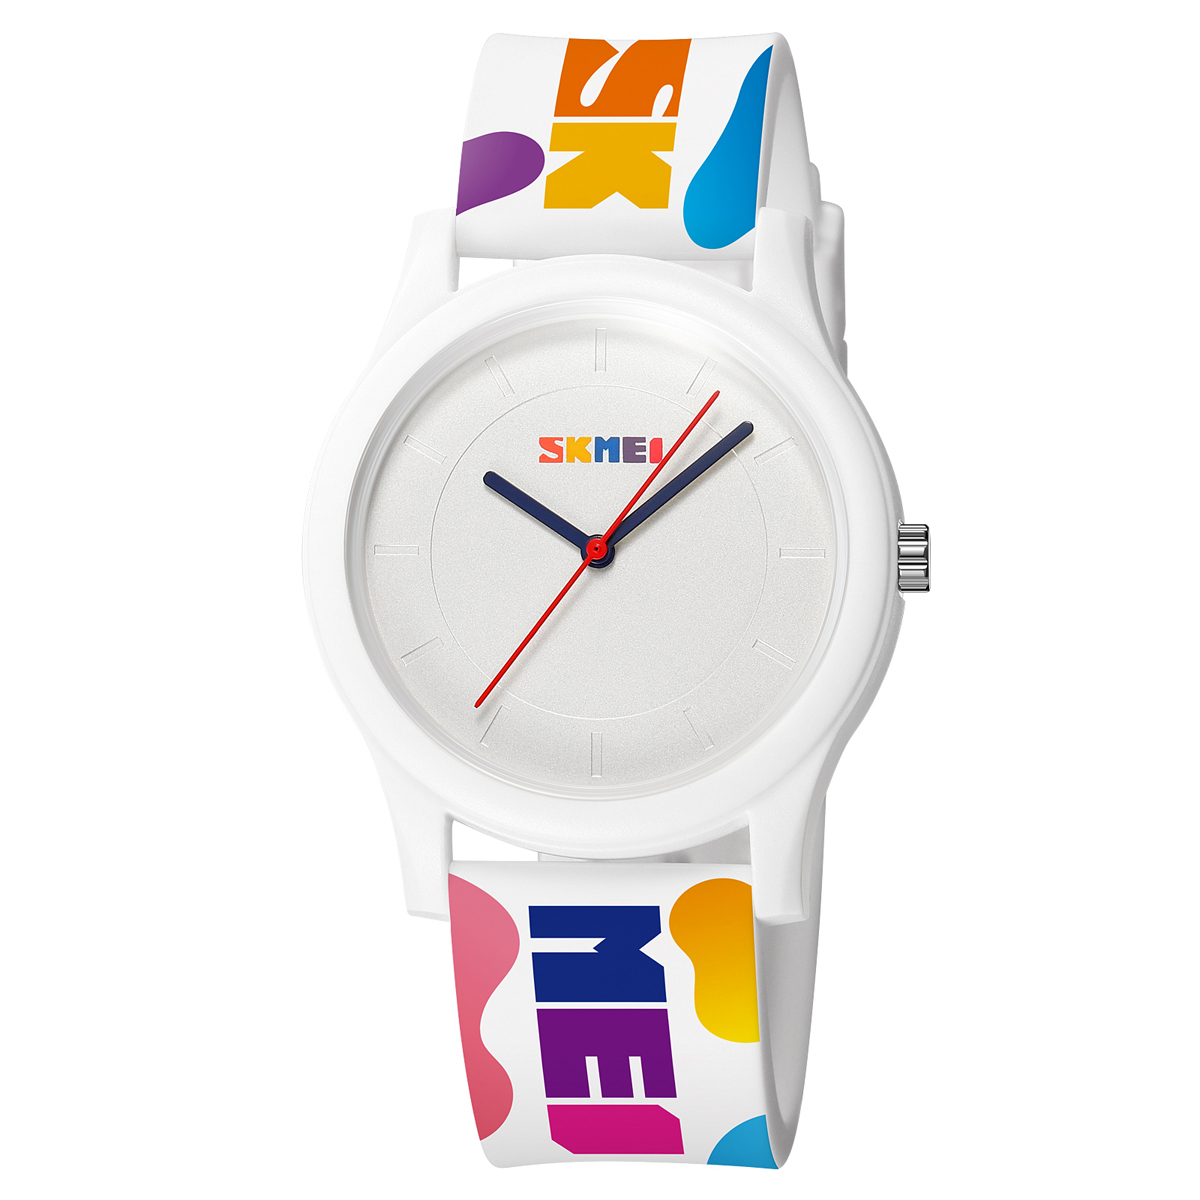 Skmei brand watch-Skmei Watch Manufacture Co.,Ltd